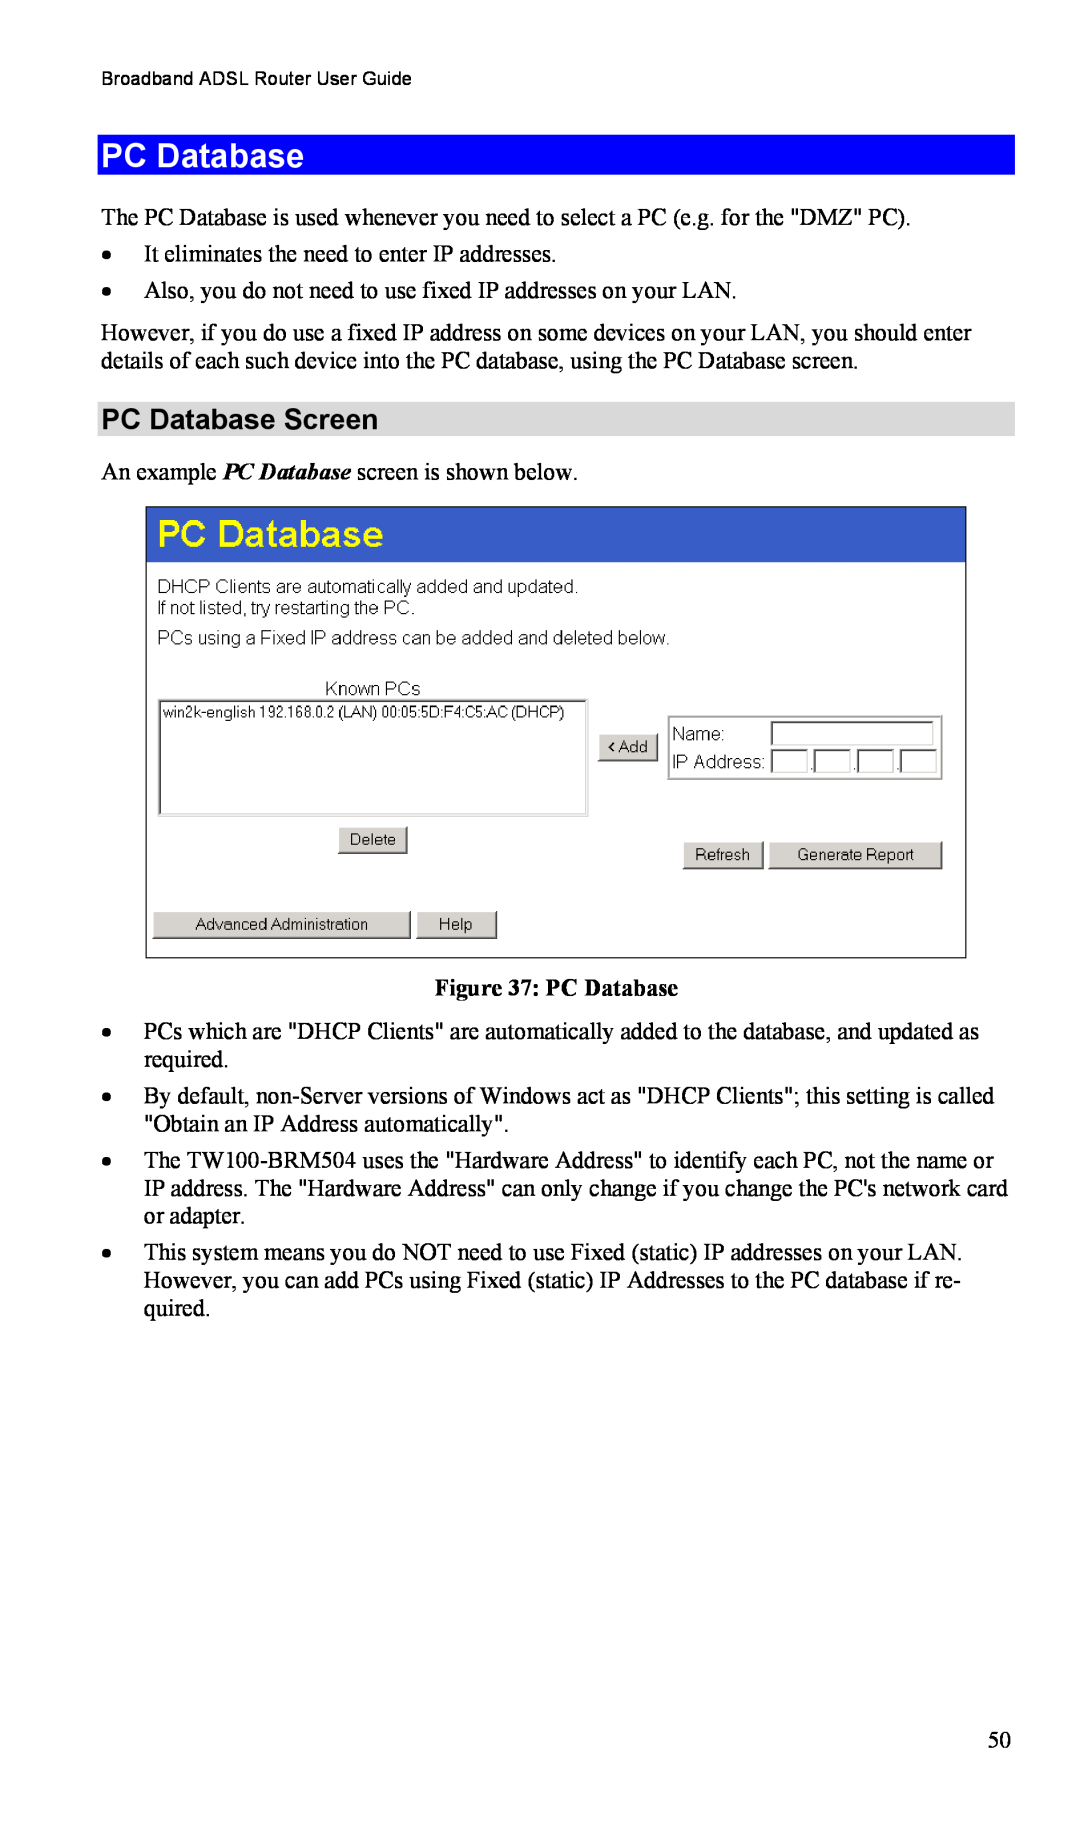 TRENDnet TW100-BRM504 manual PC Database Screen 